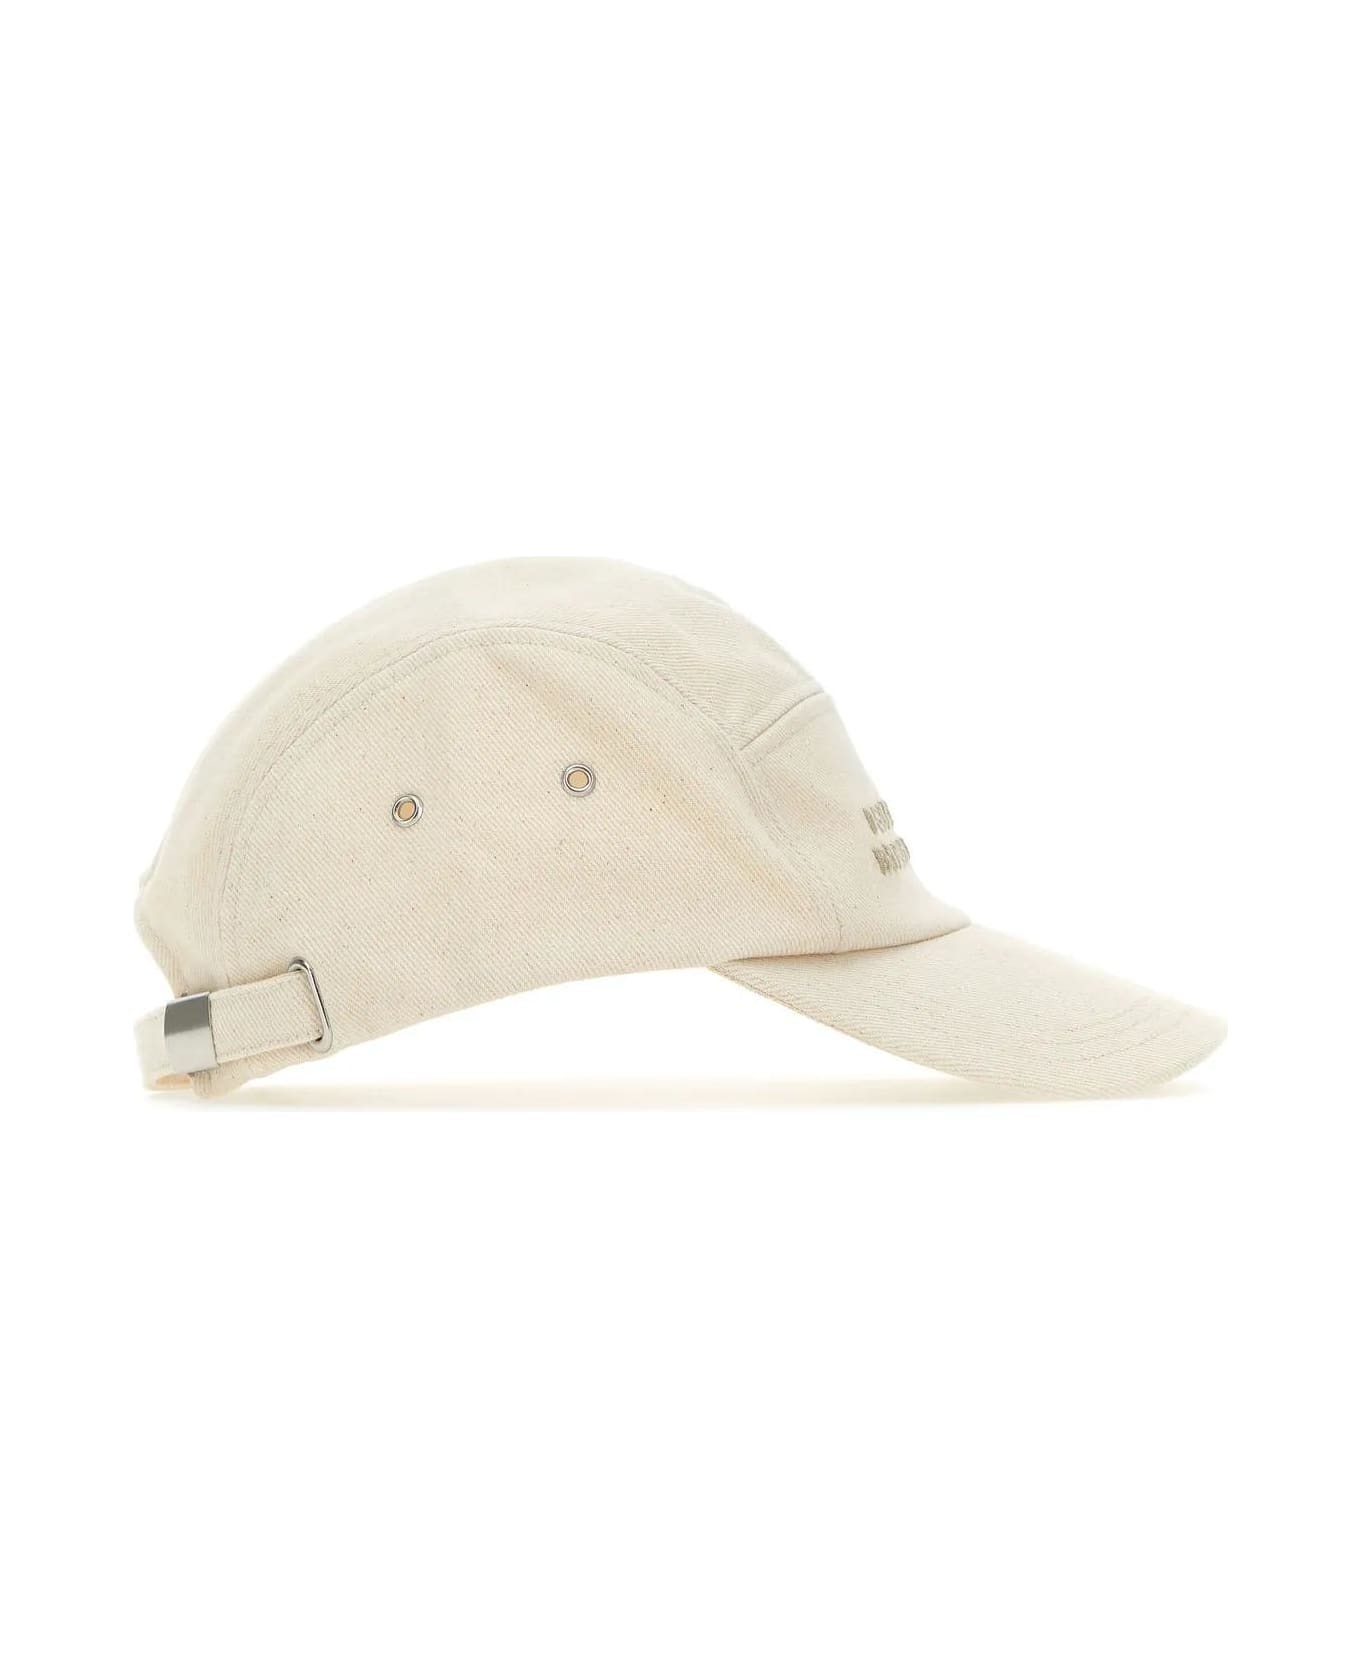 Isabel Marant Malange Ivory Cotton Tedji Baseball Cap - POWDER 帽子